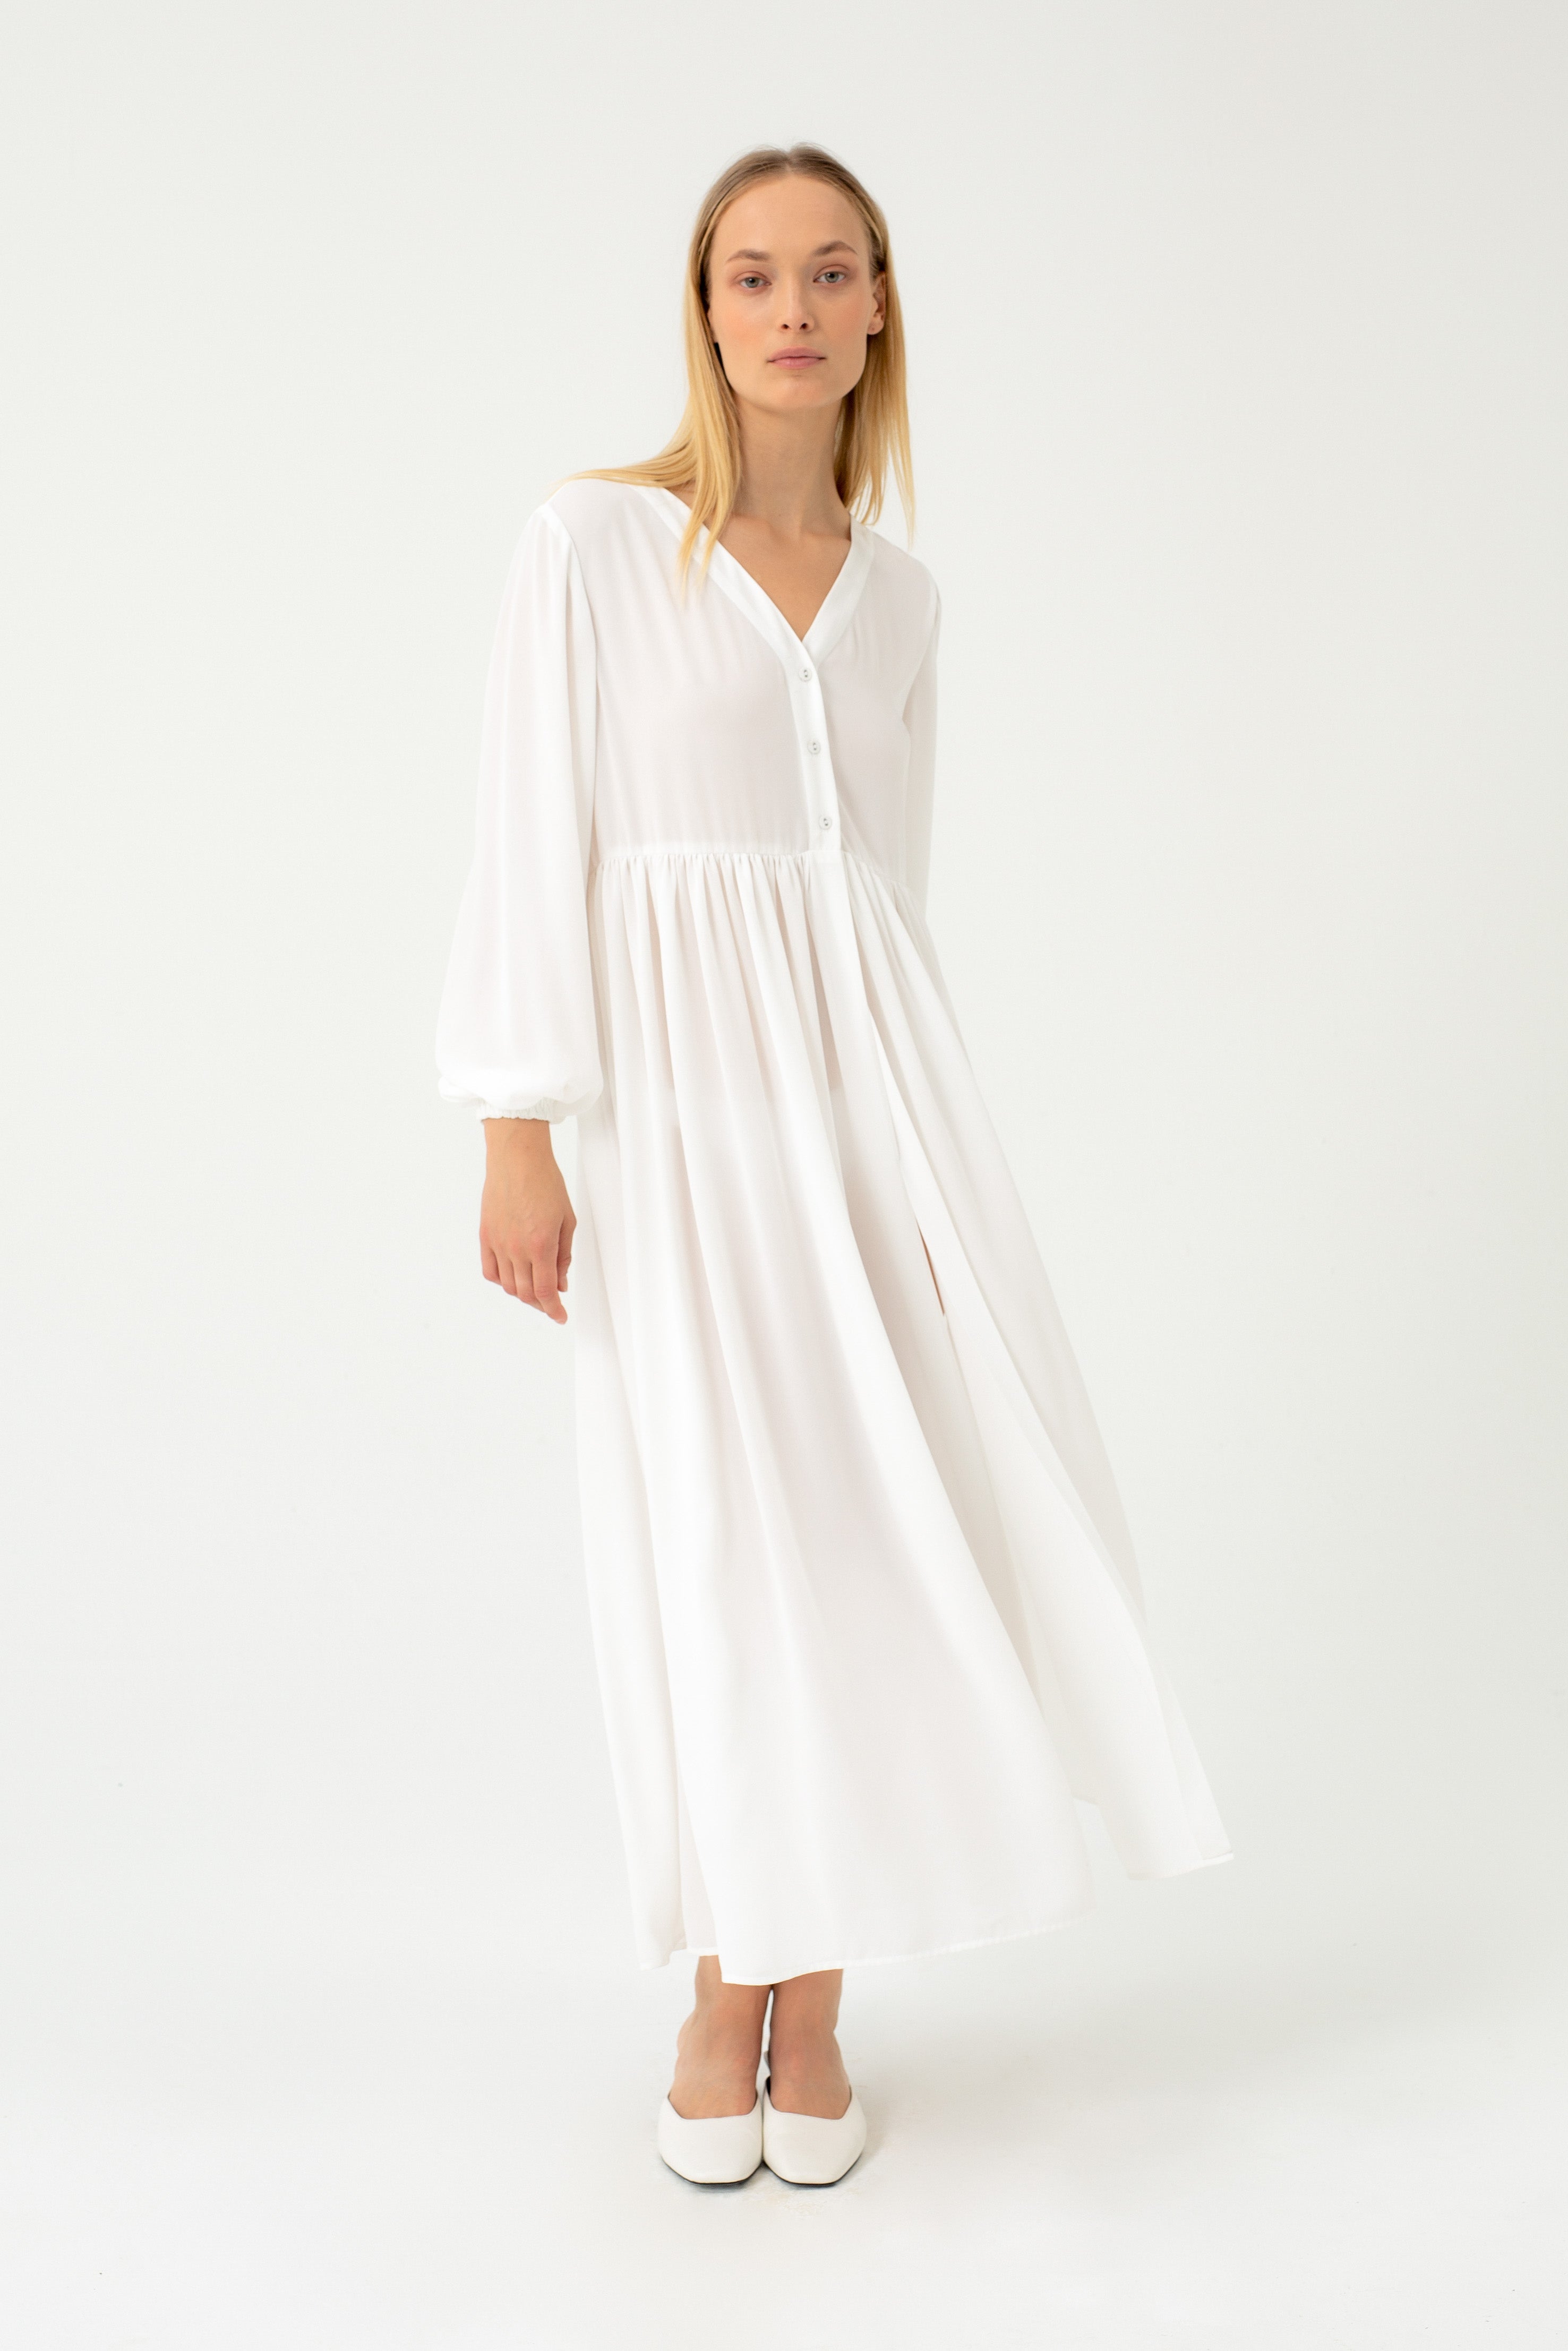 TRANSLUCENT MAXI WHITE DRESS